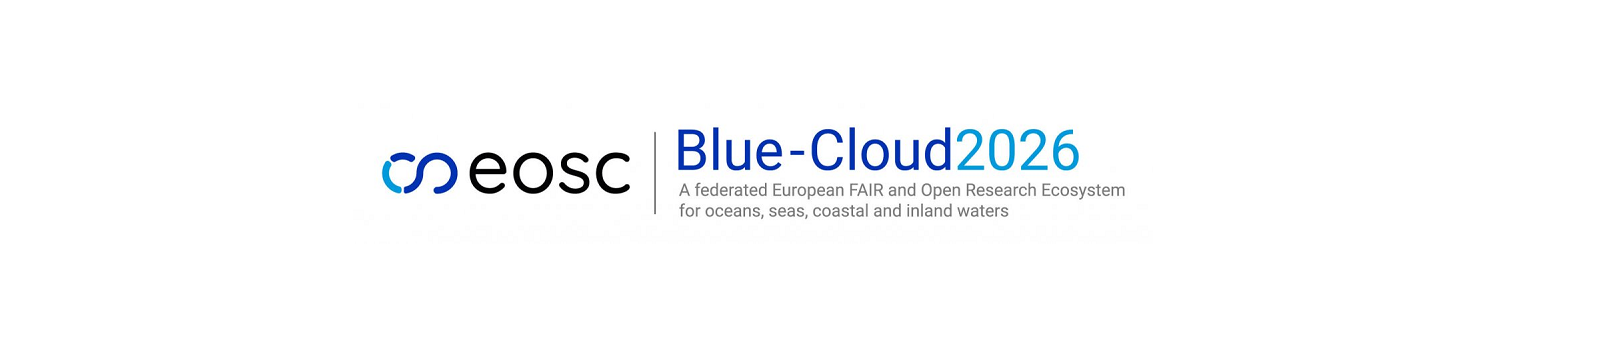 Blue-Cloud 2026, an Italian-led EU project to improve ocean sustainability